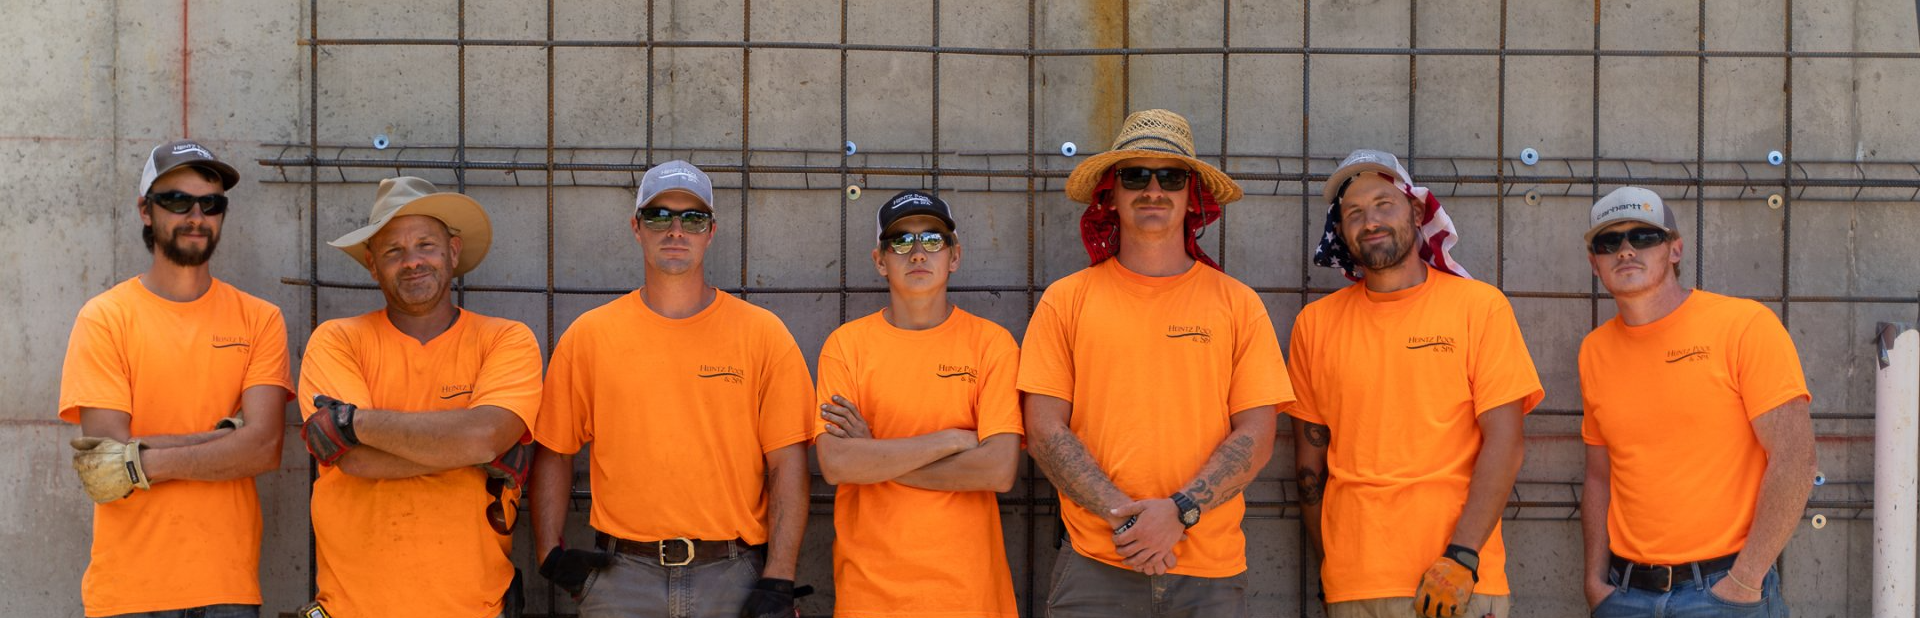 Heintz Pool & Spa team of seven standing side by side wearing orange uniforms